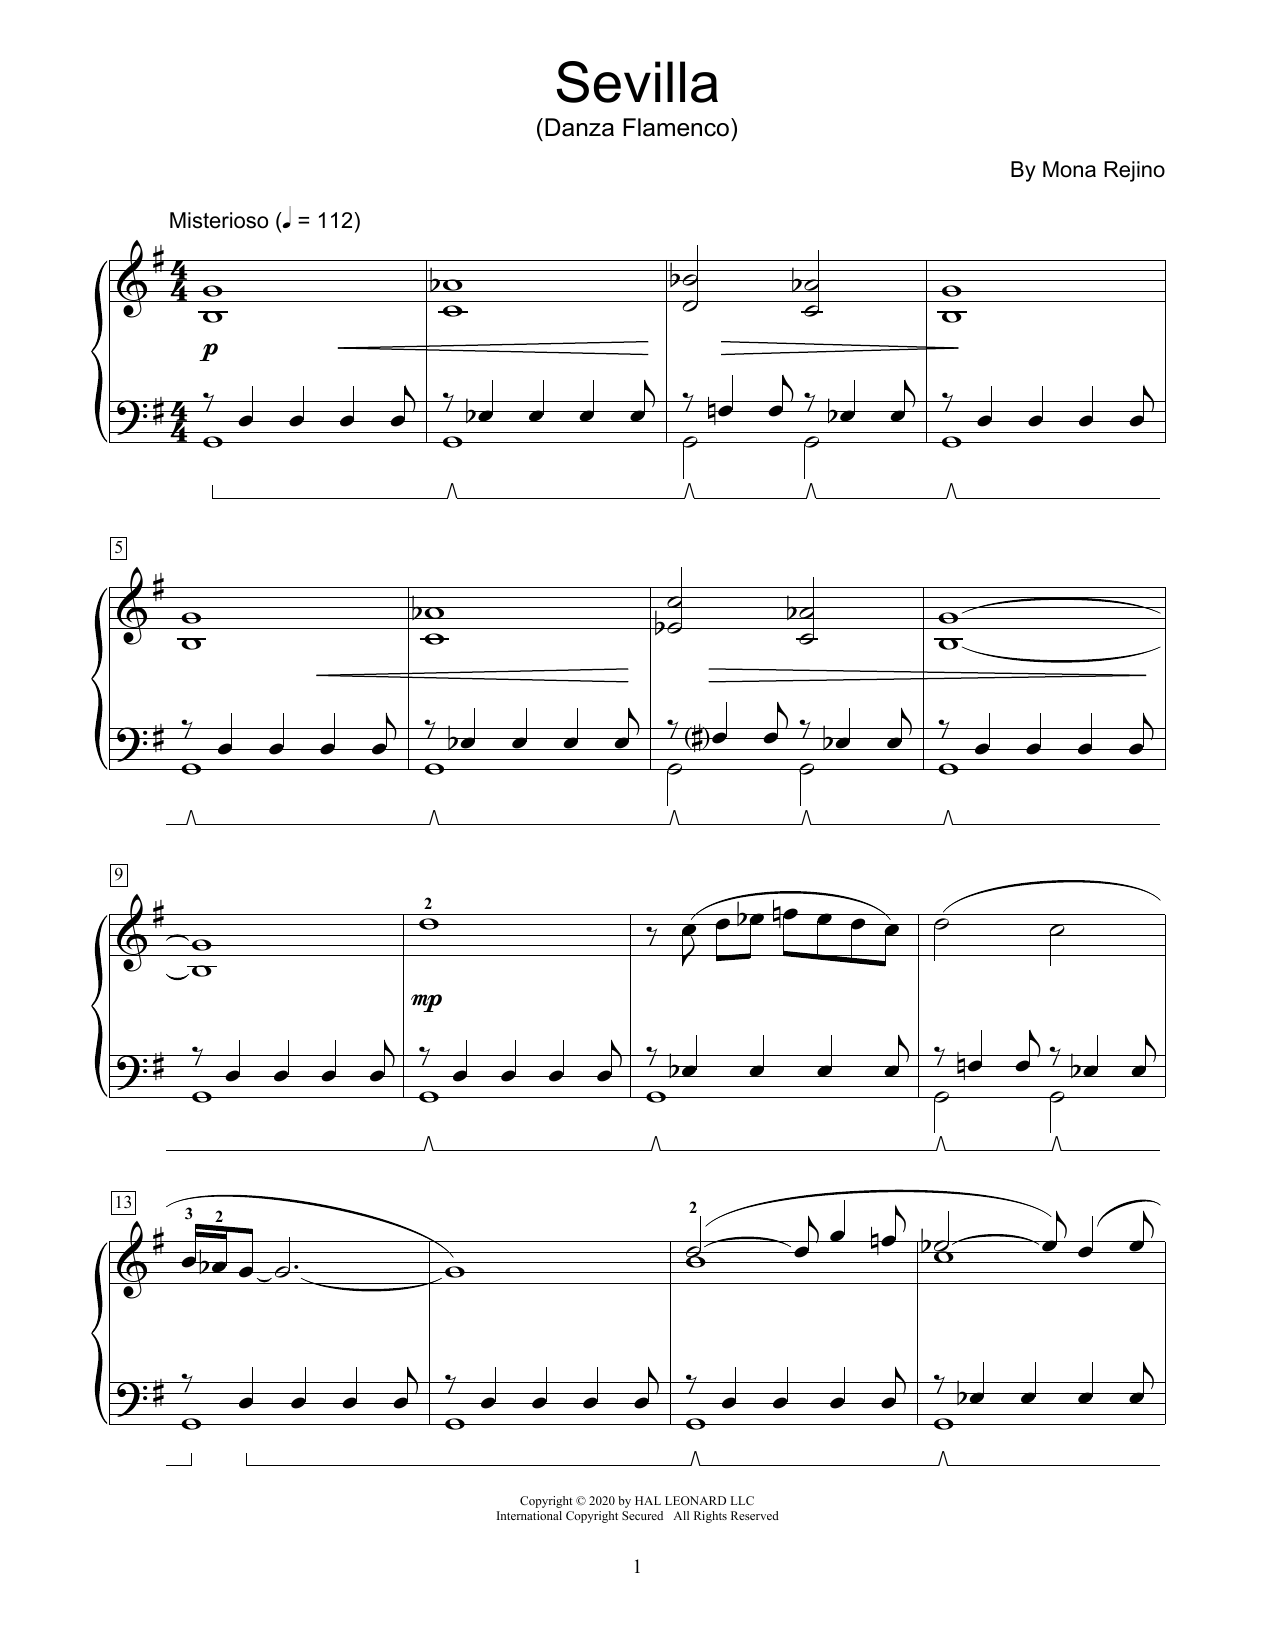 Download Mona Rejino Sevilla (Danza Flamenco) Sheet Music and learn how to play Educational Piano PDF digital score in minutes